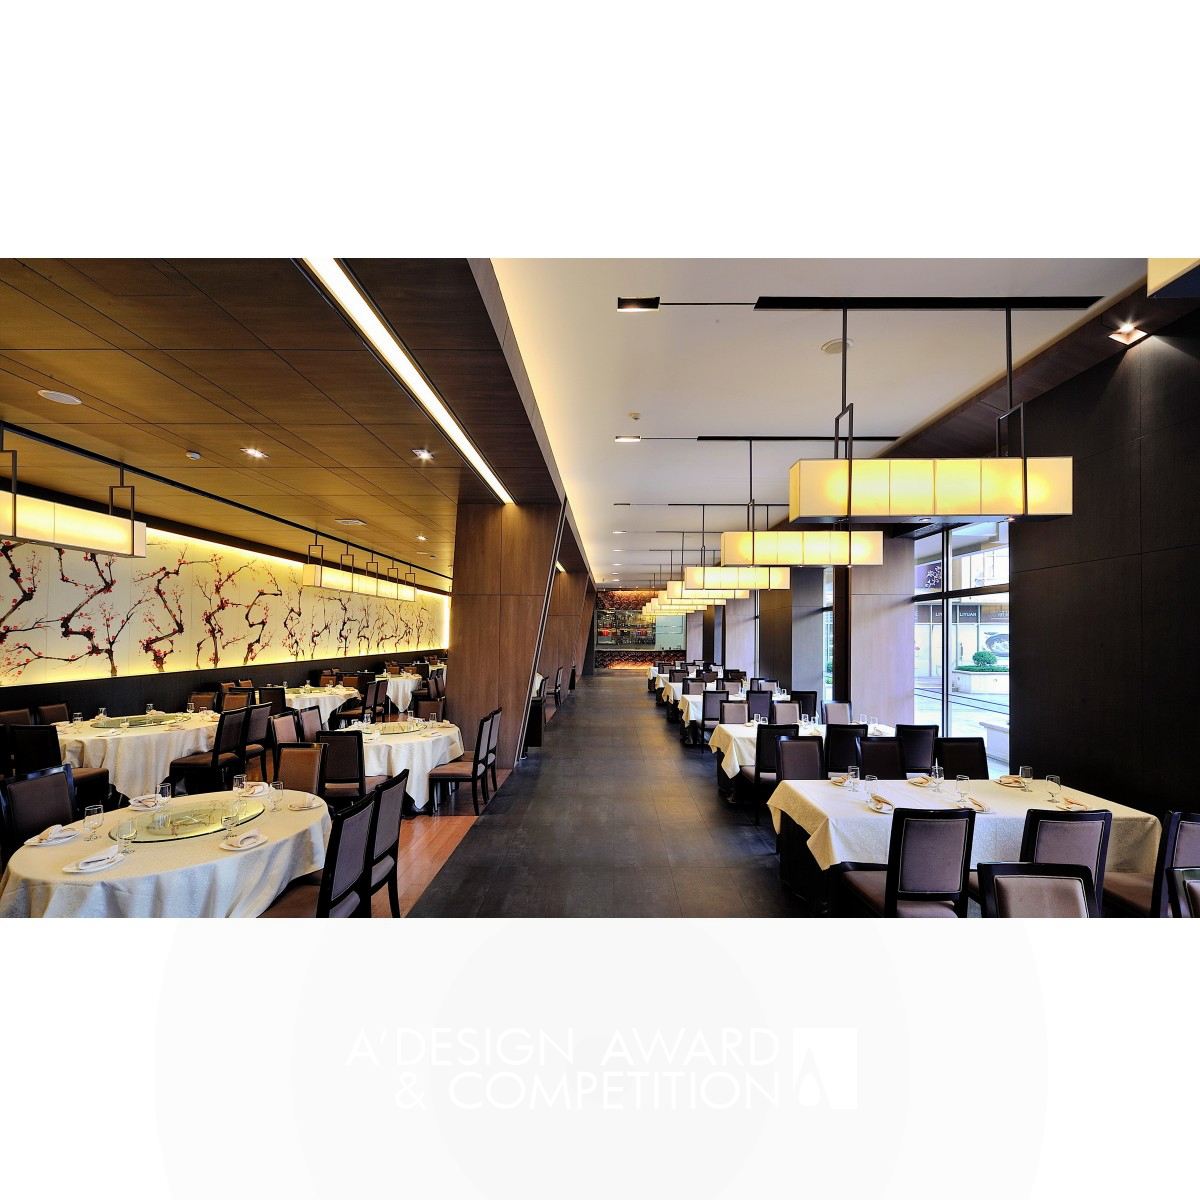 Li Yuan Restaurant Restaurant by Kris Lin Silver Interior Space and Exhibition Design Award Winner 2013 